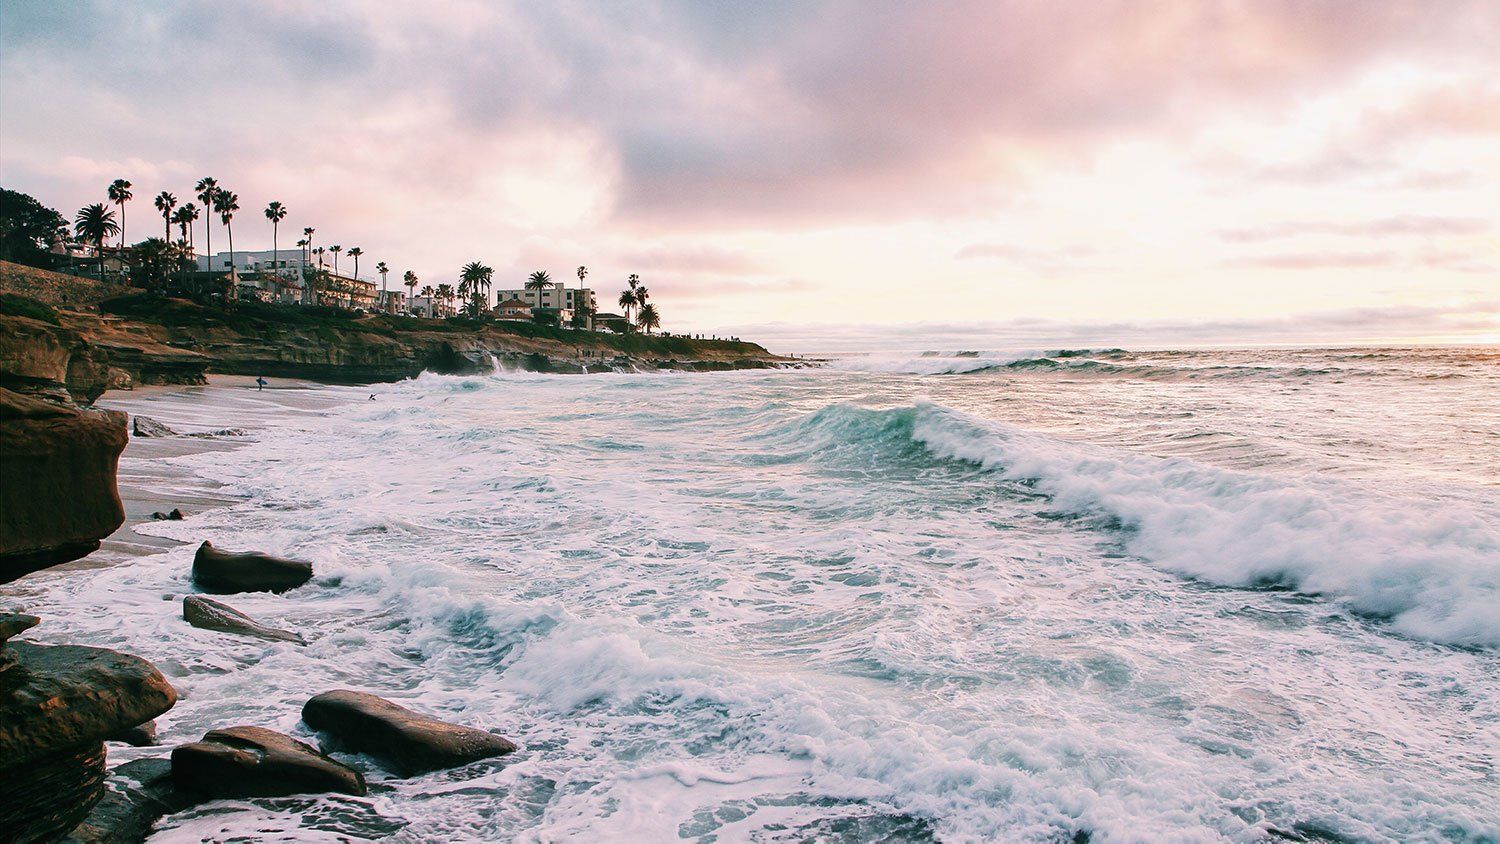 Scenic Southern California coastline in San Diego